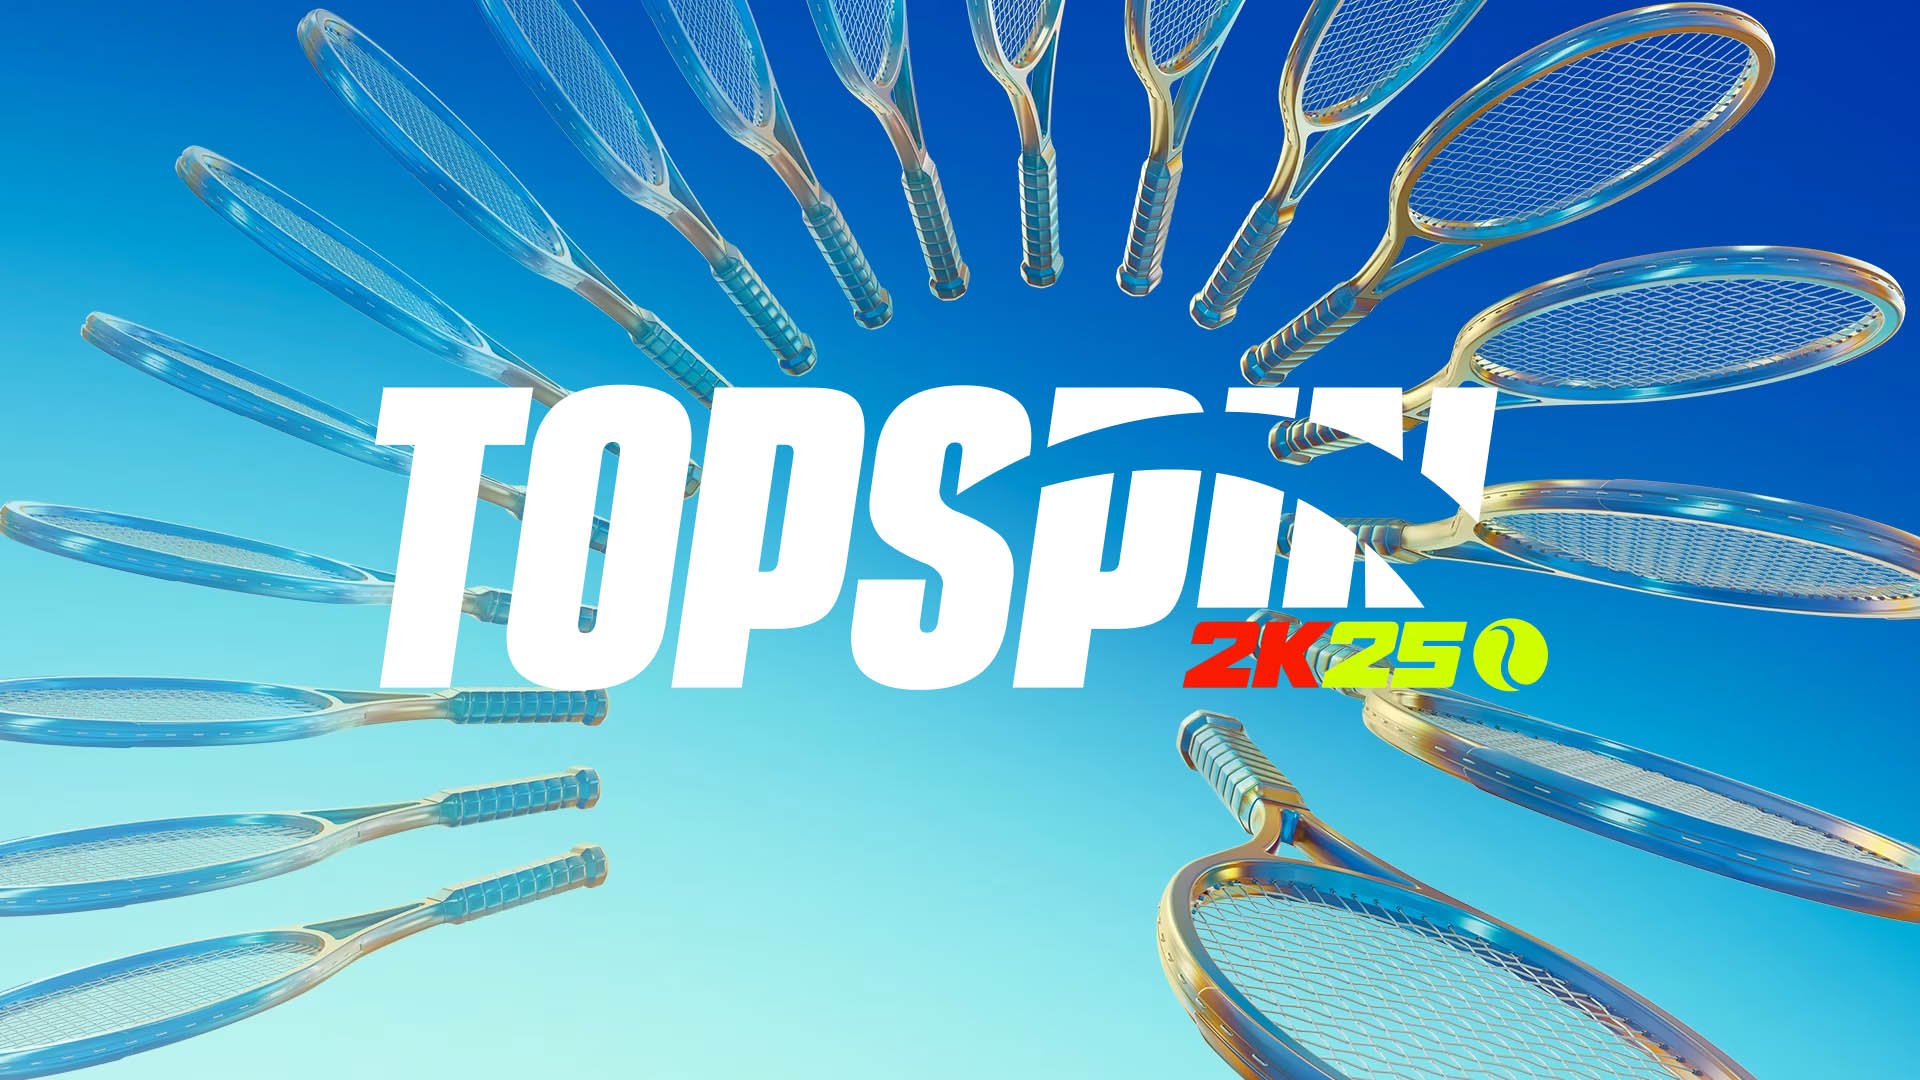 Top Spin 2K25 : du gameplay qui va régaler les fans de tennis